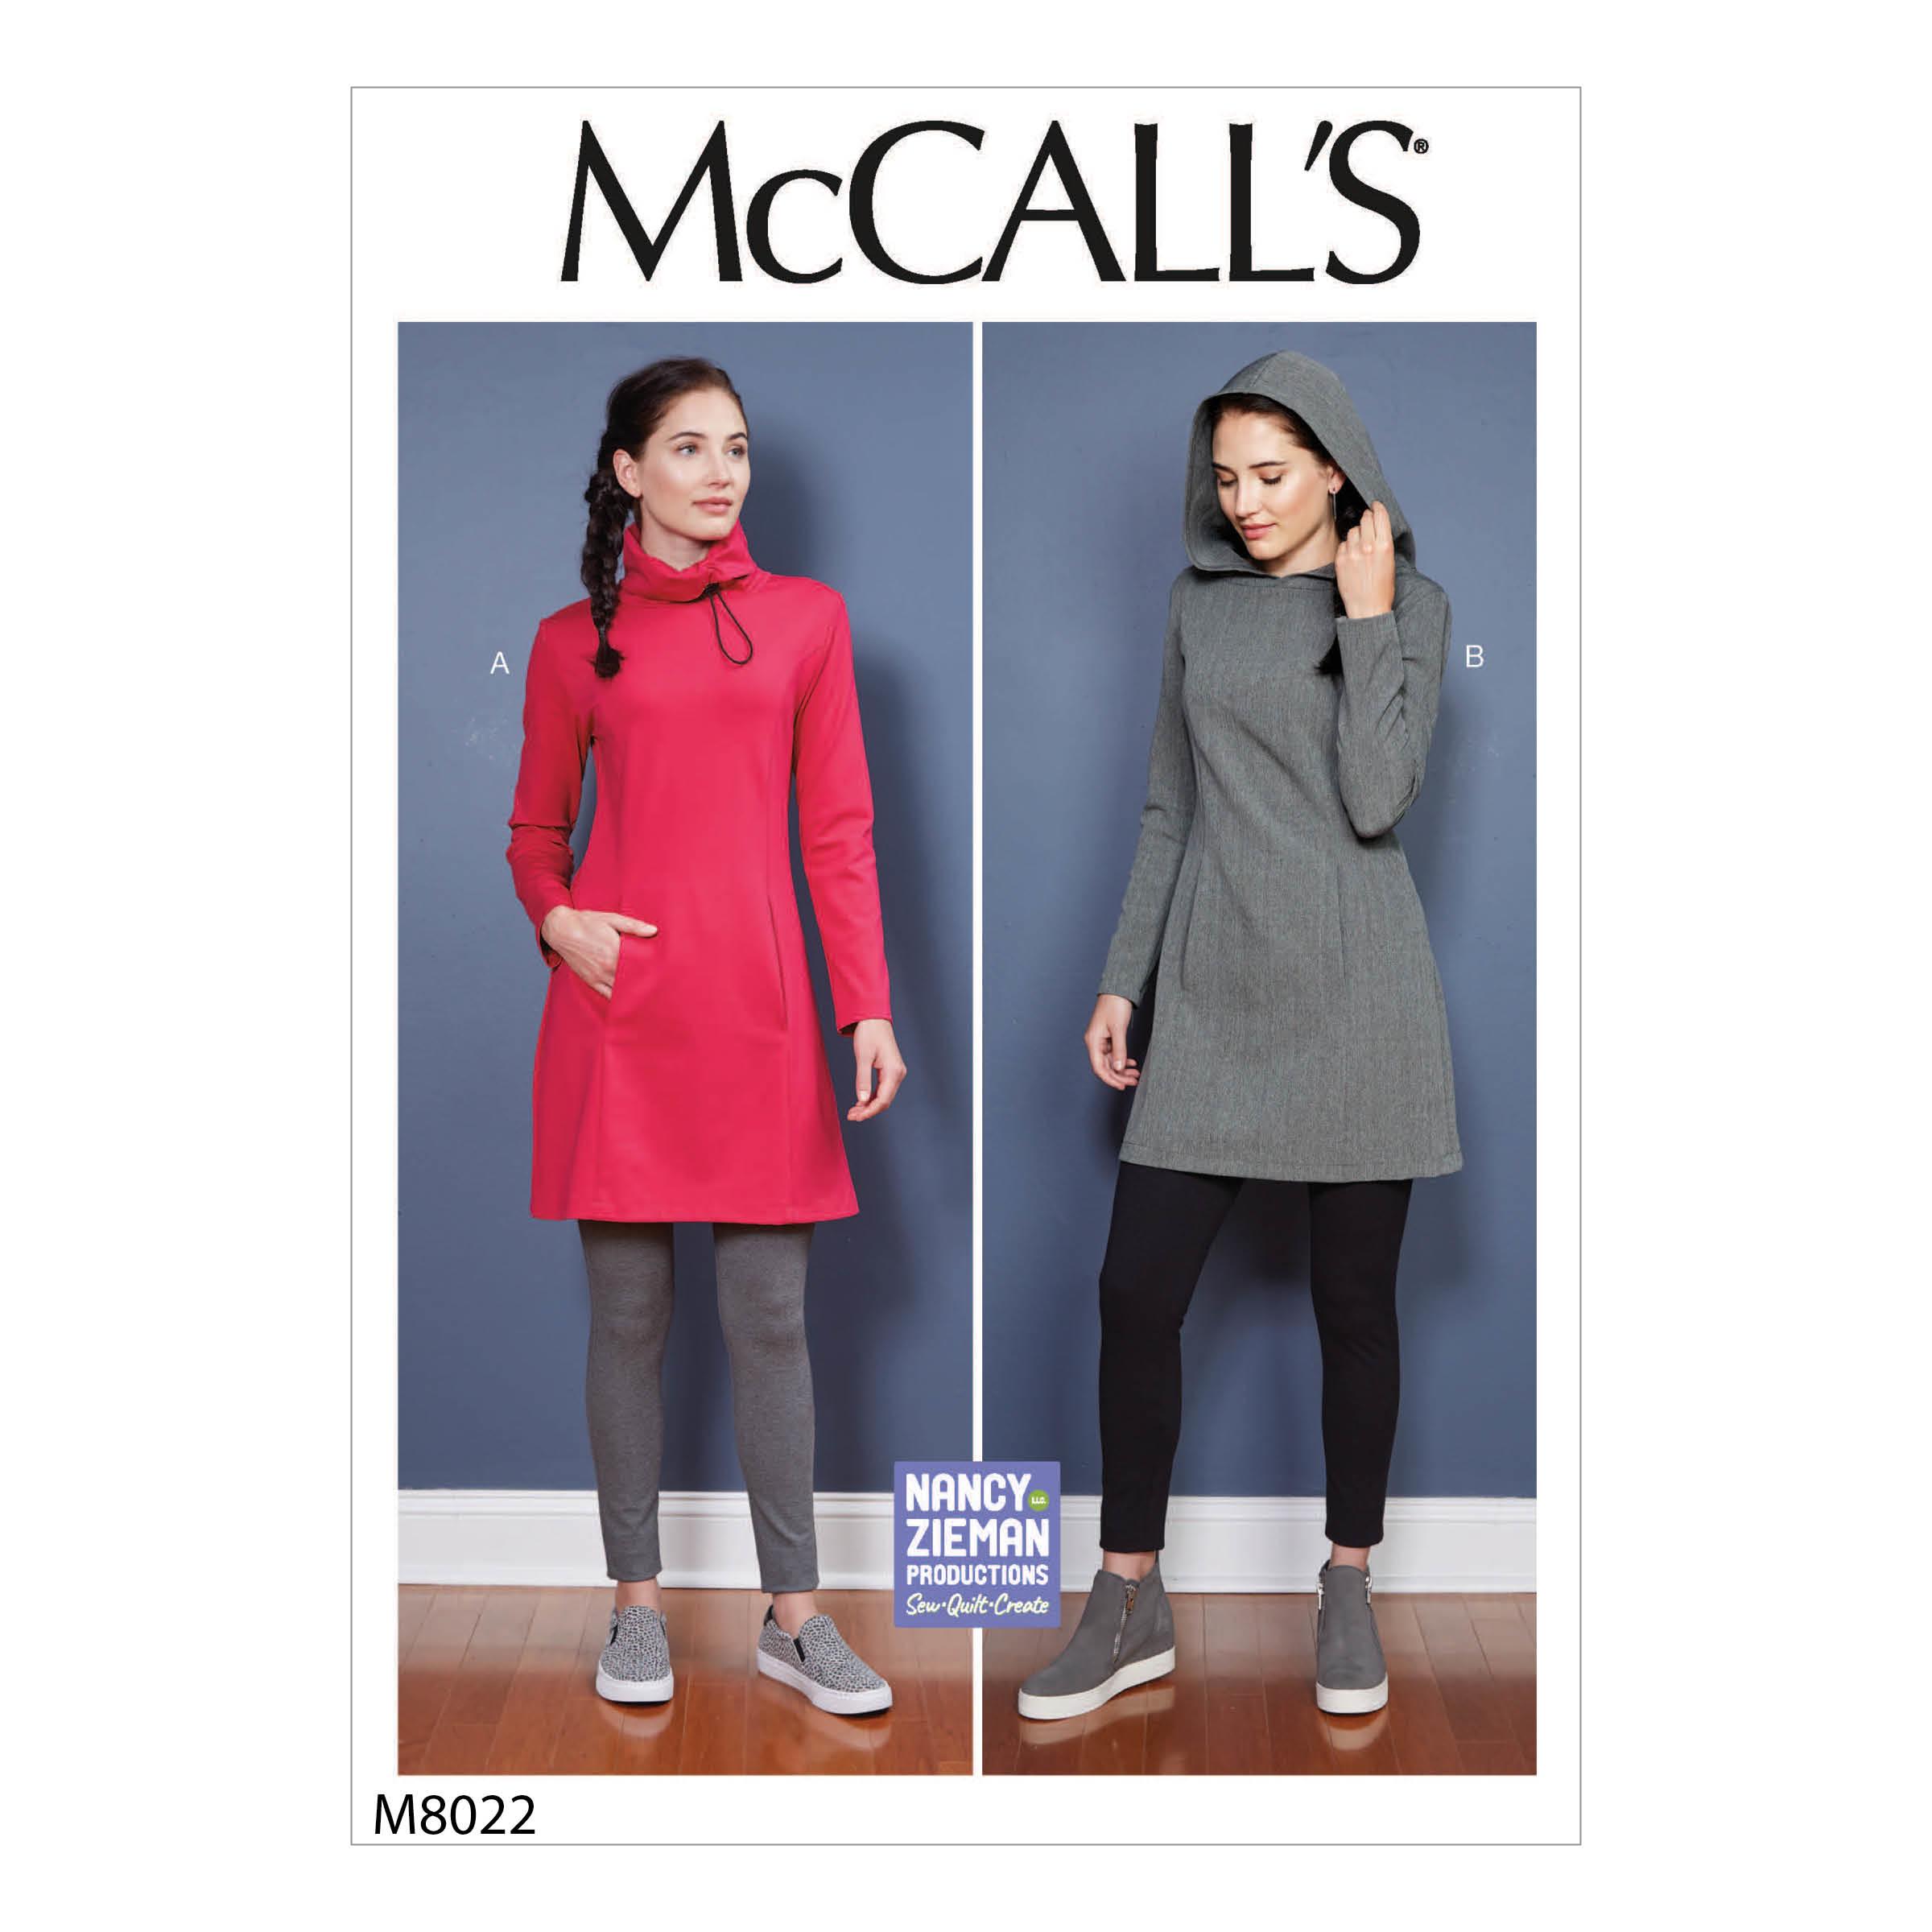 McCalls M8022 Misses Dresses, Misses Tops